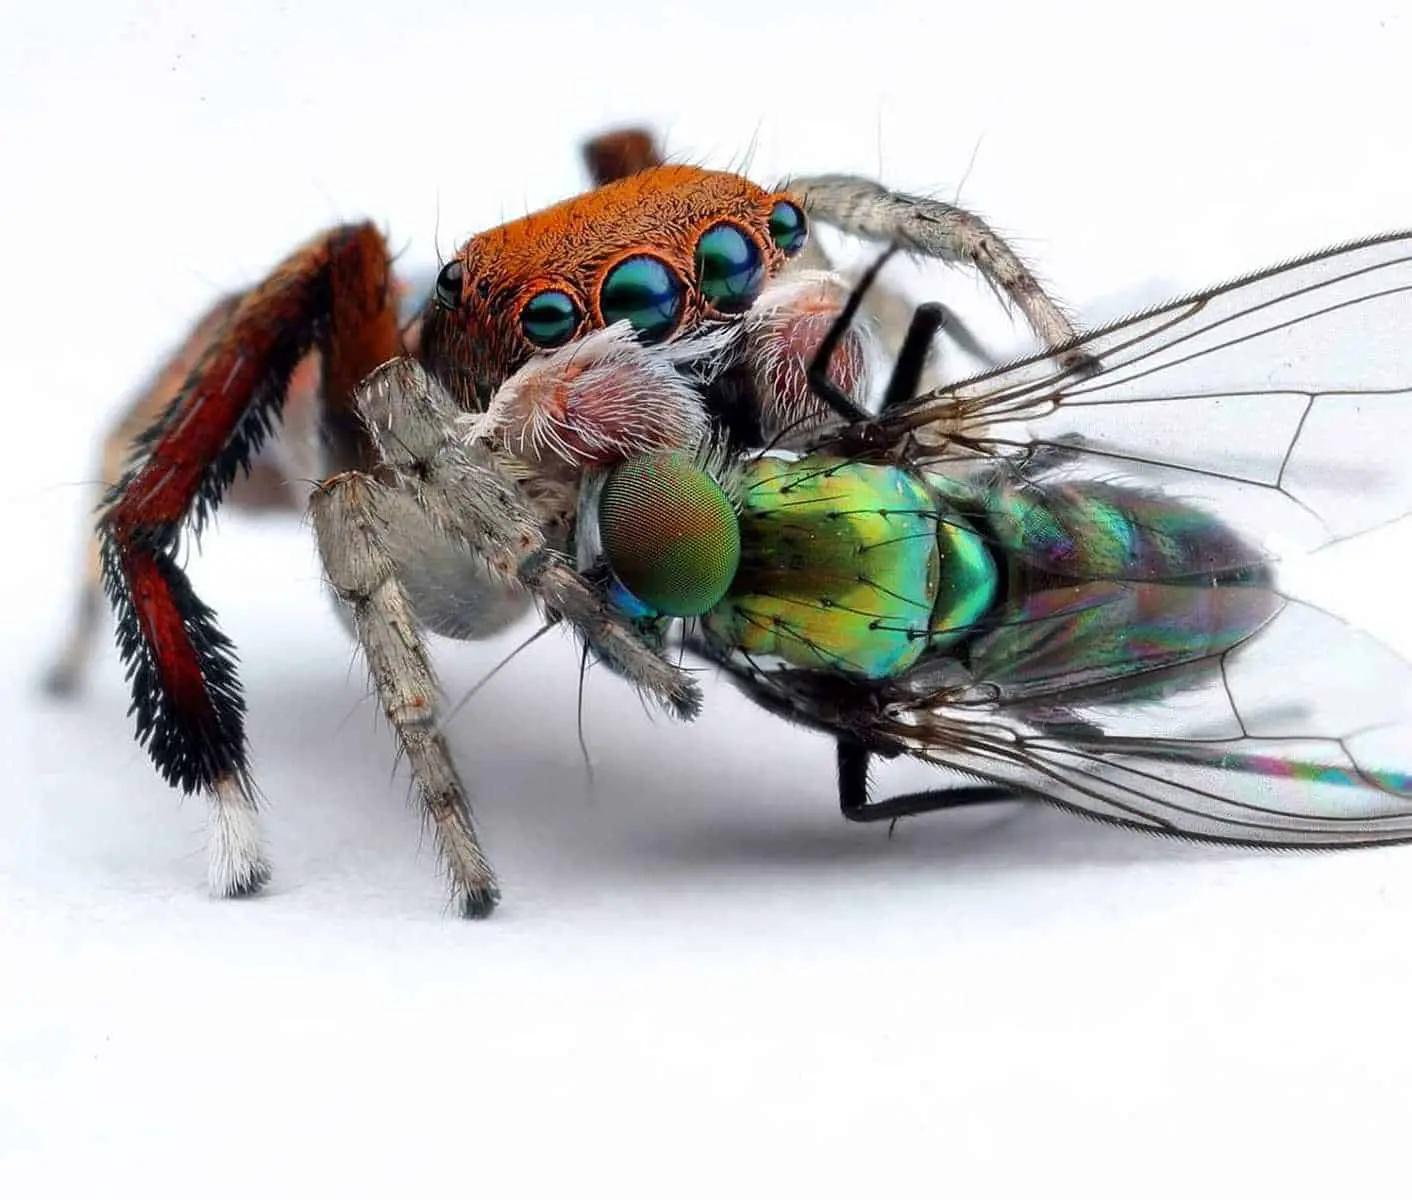 Maratus pavonis feeding on a fly